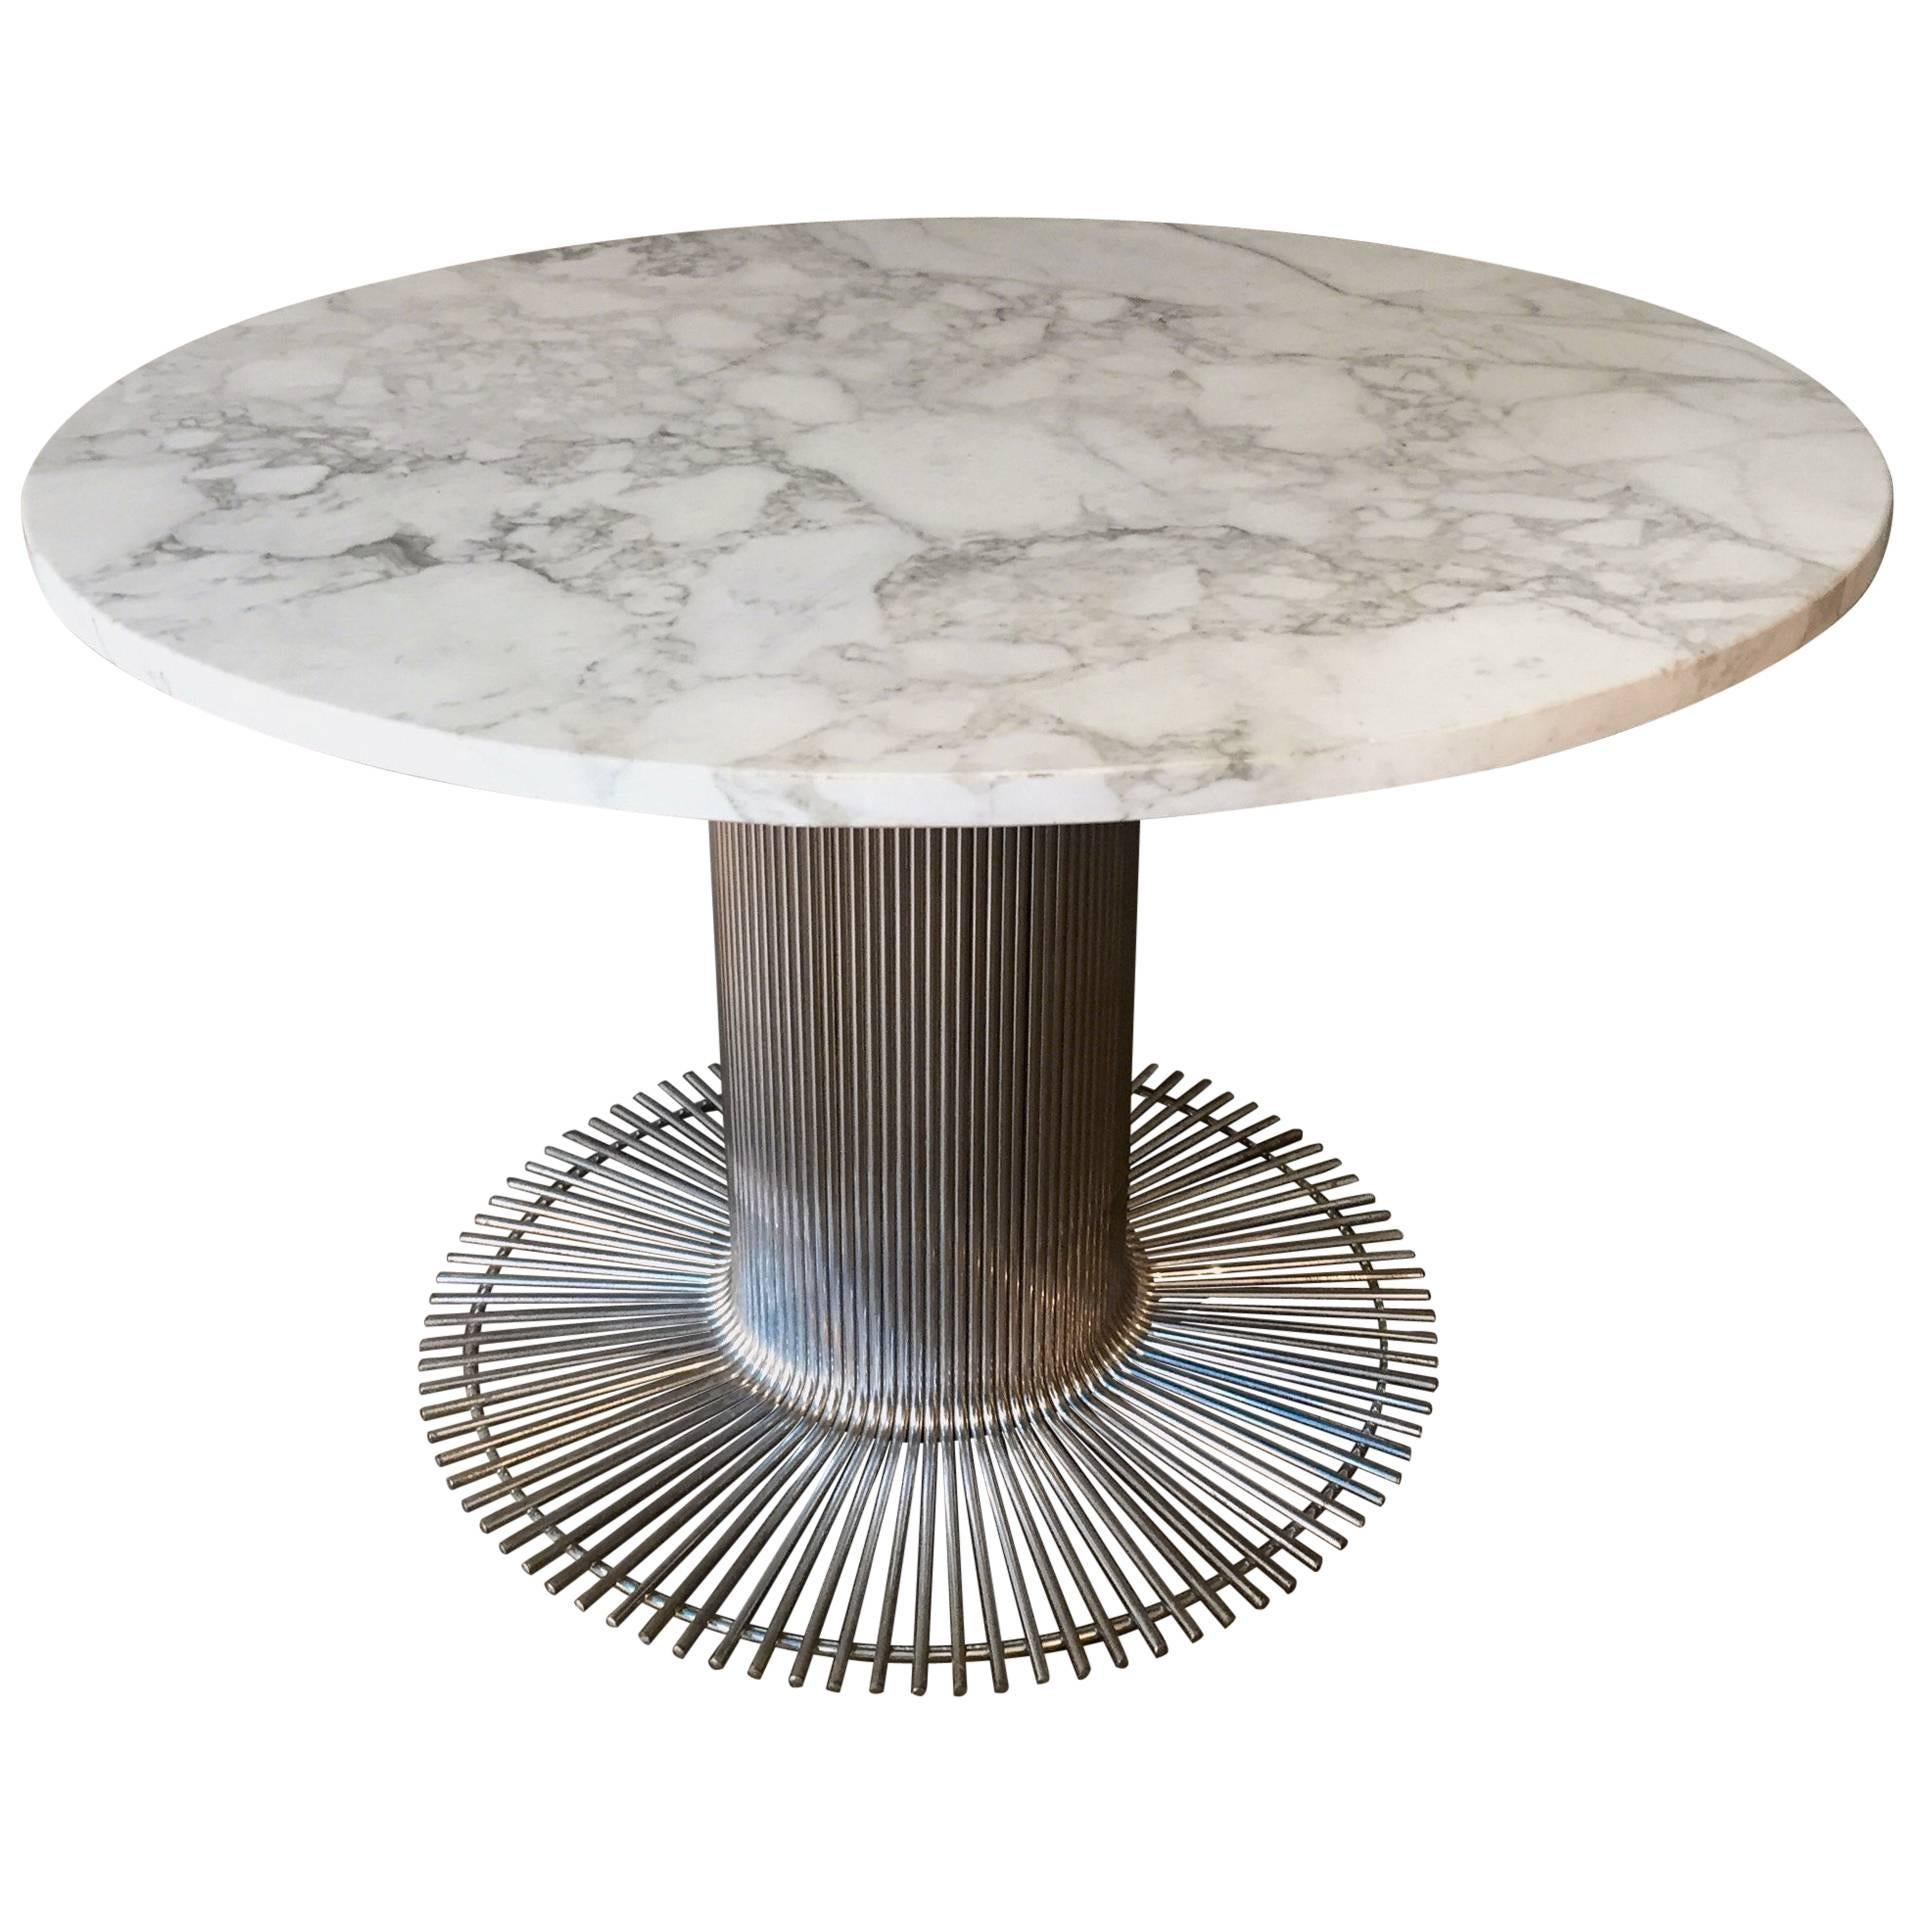 Italian Marble Table and Chromed Metal Base, circa 1970